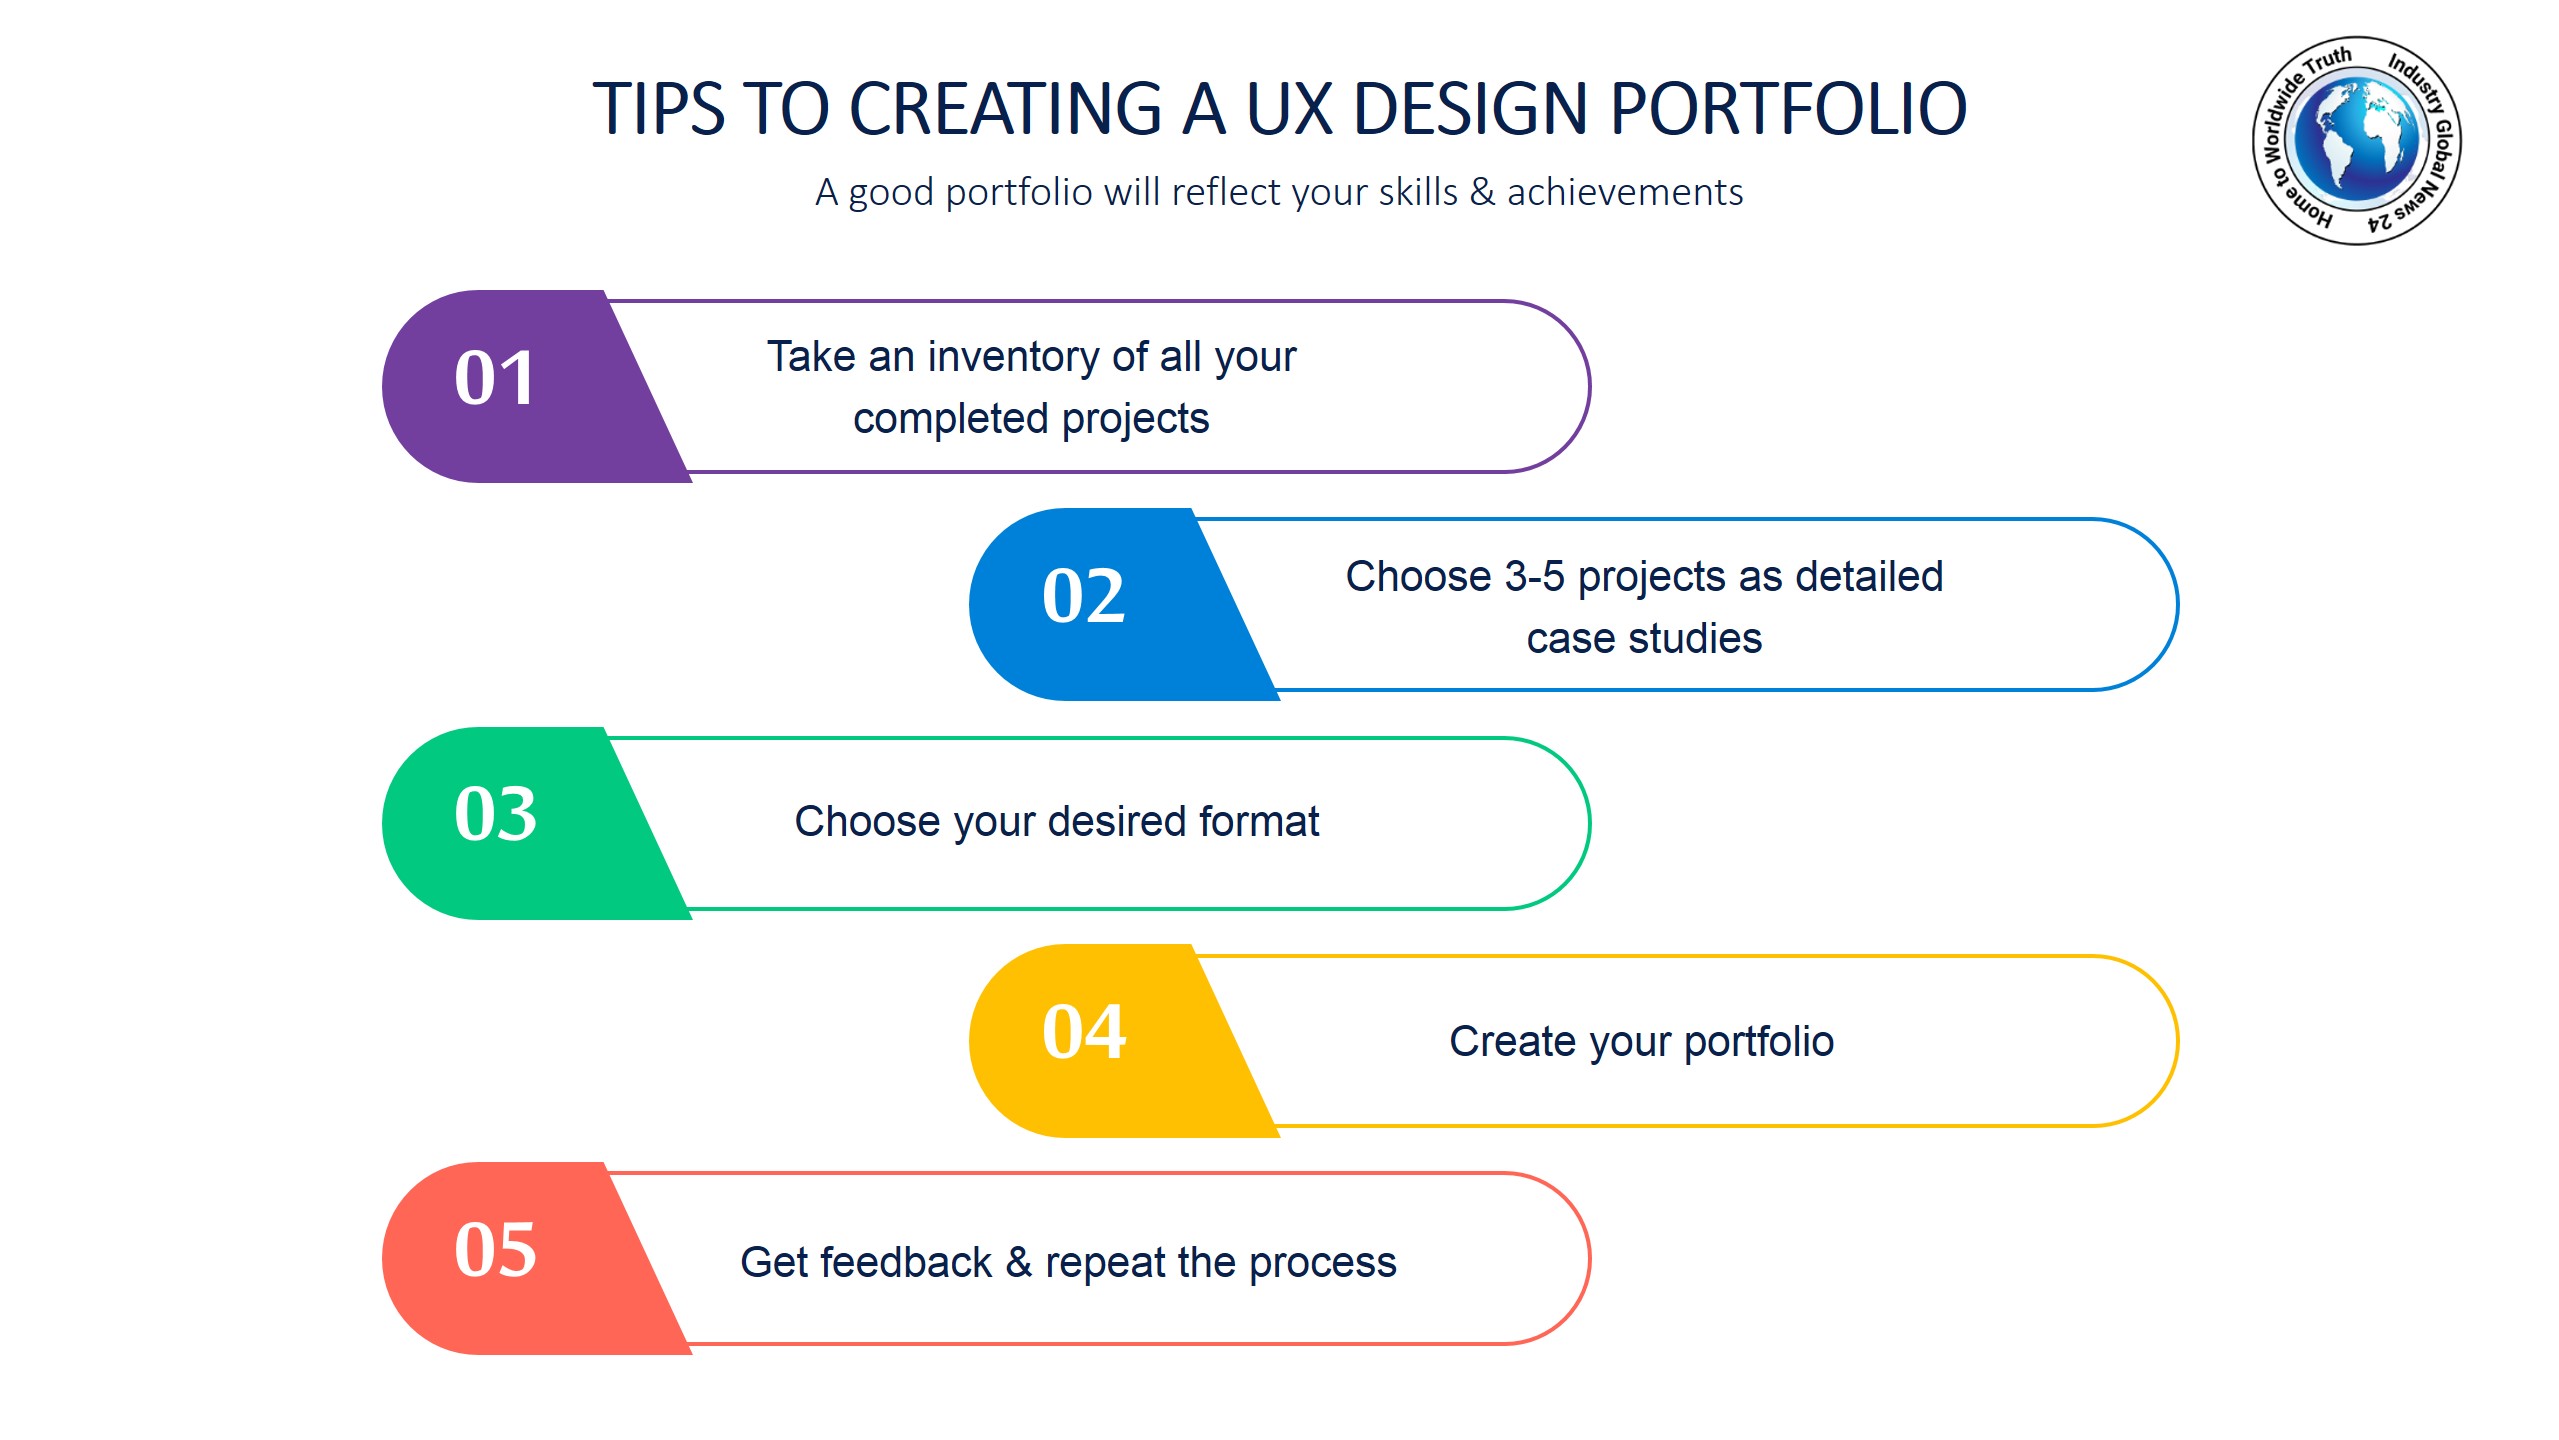 Tips to creating a UX design portfolio